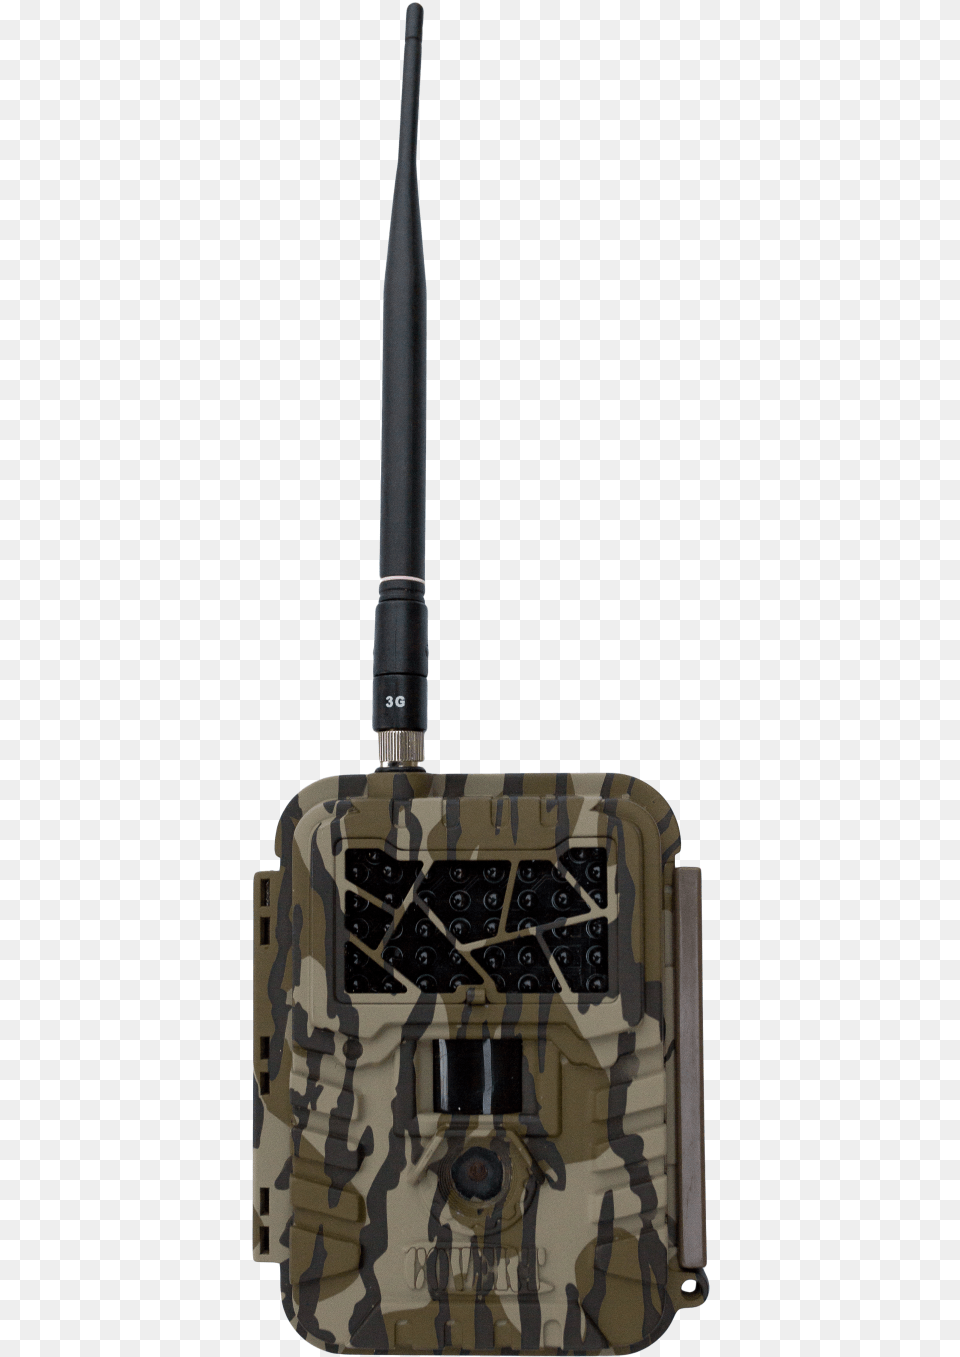 Blackhawk 1 Covert Scouting Cameras Digital Camera Blackhawk, Electrical Device, Microphone, Firearm, Gun Png Image